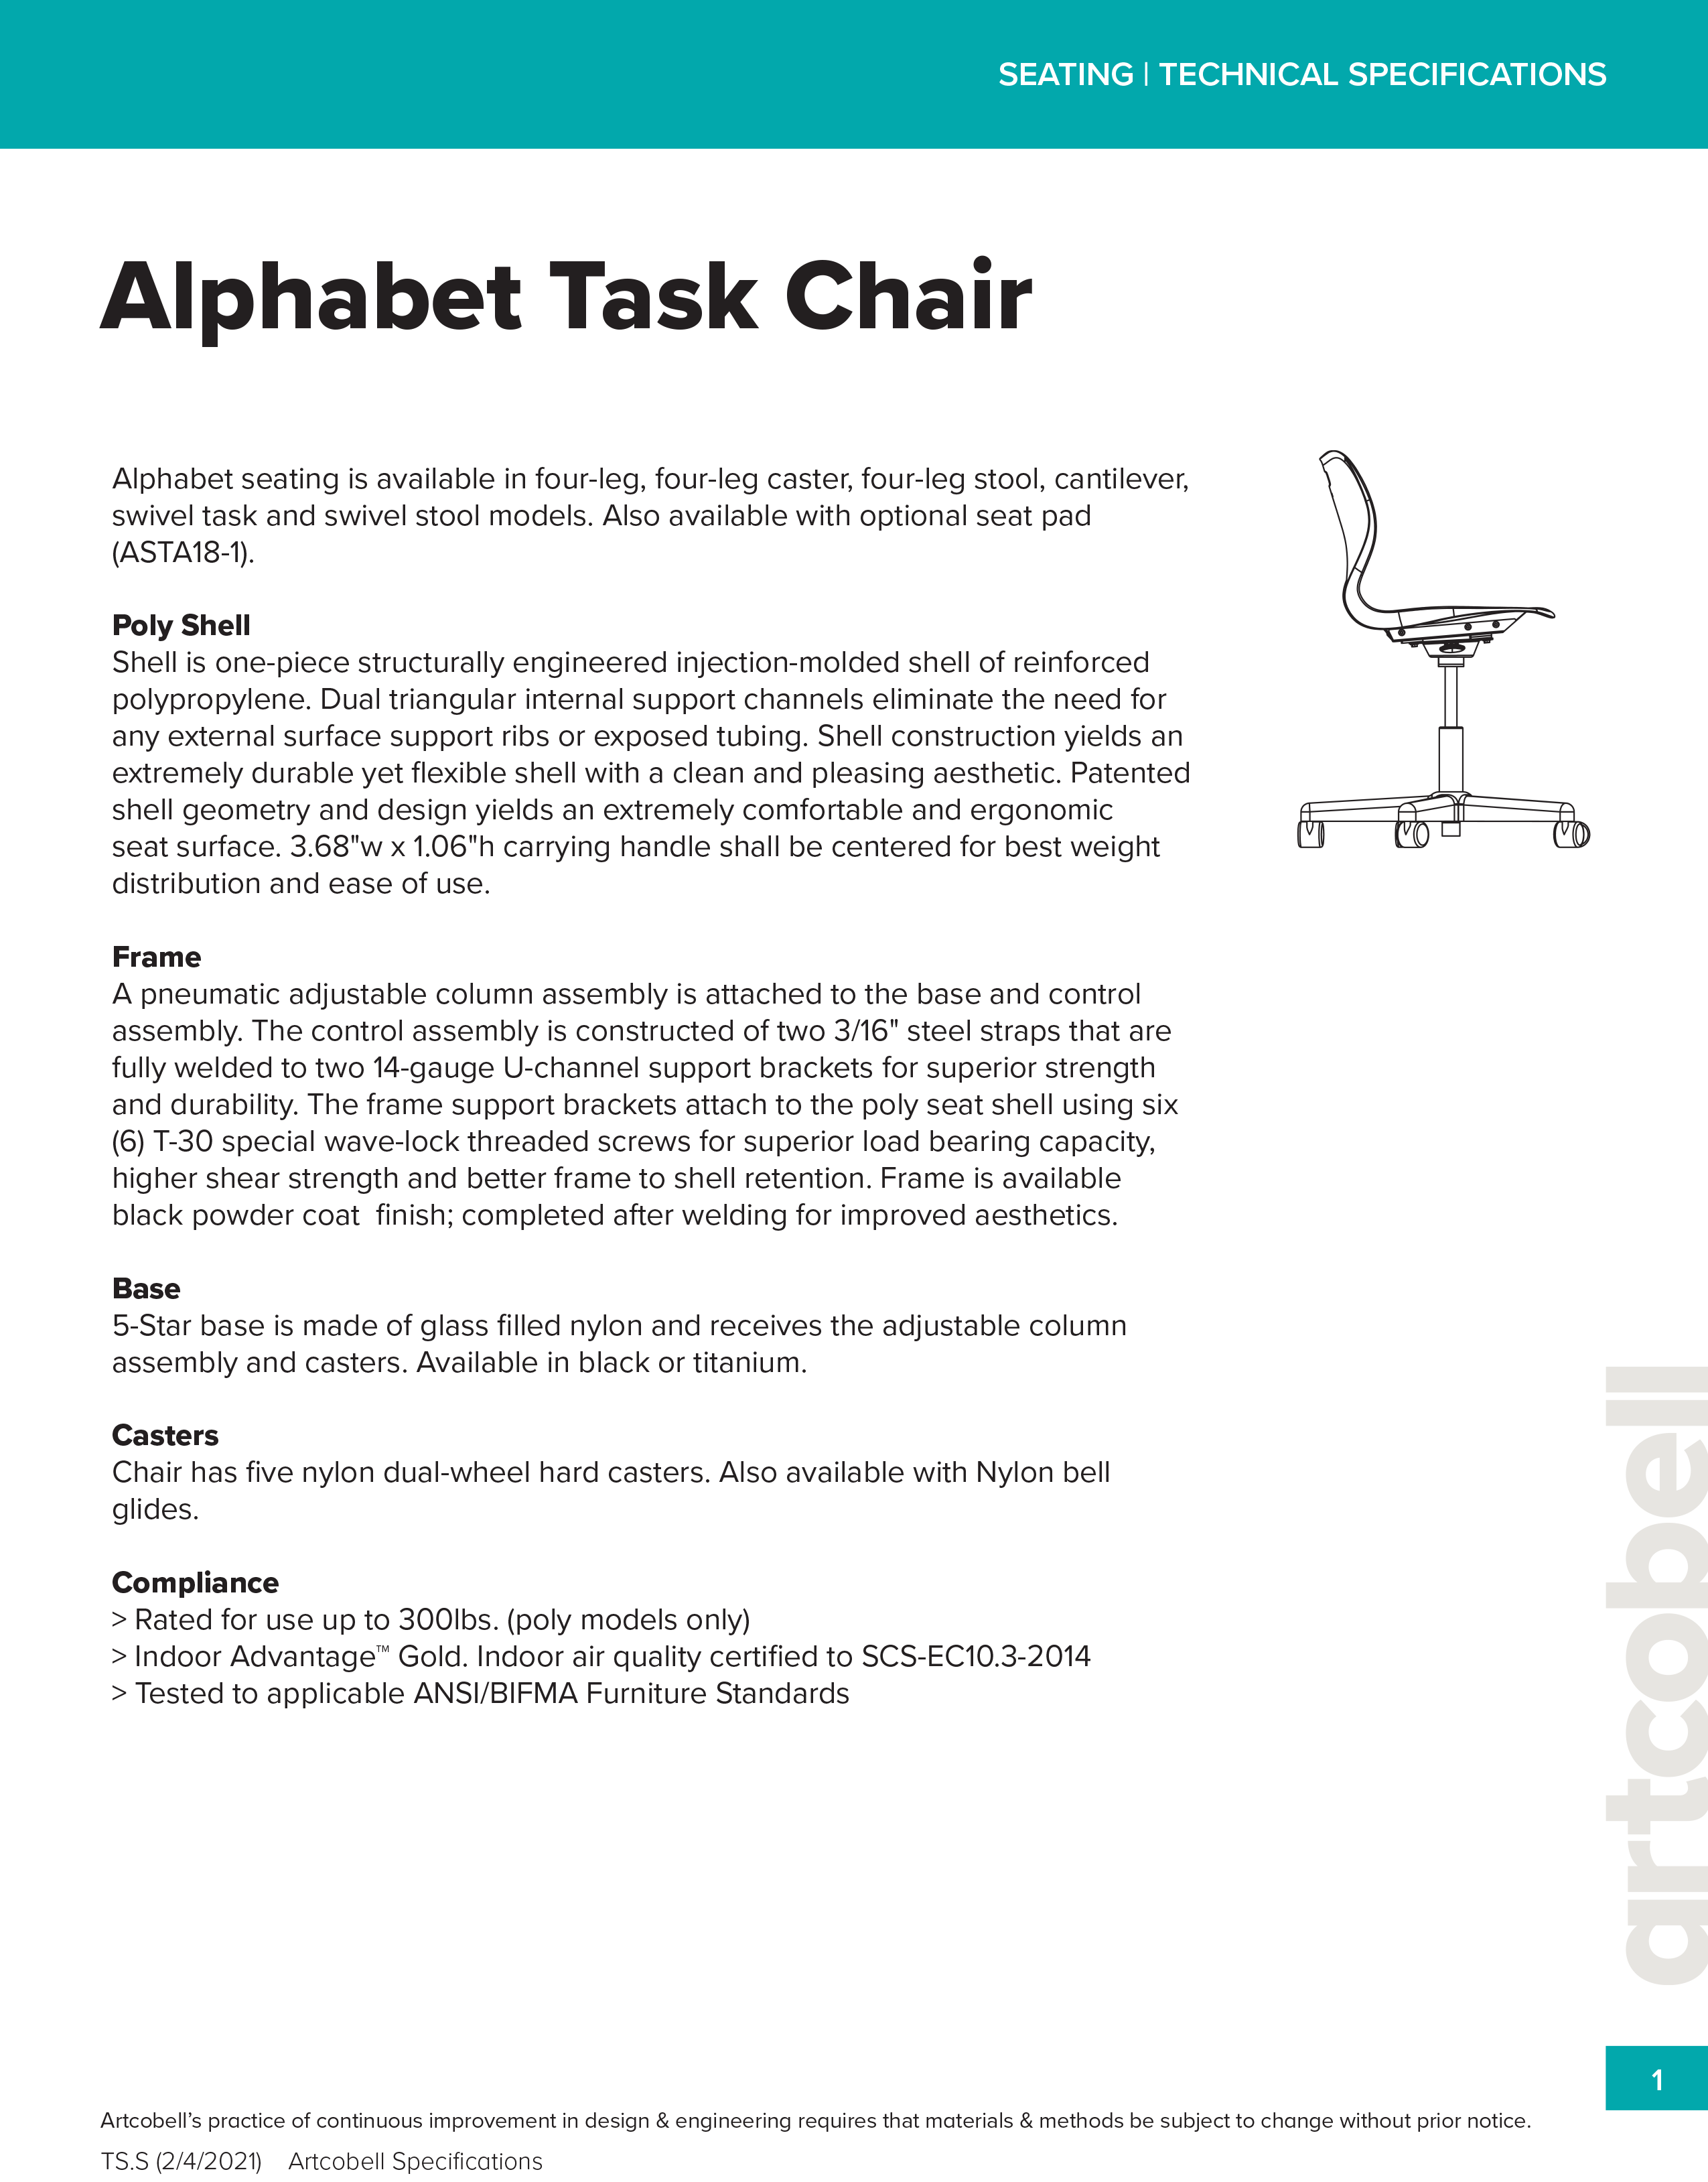 SeatingSpecifications_Alphabet_ASTATaskChair